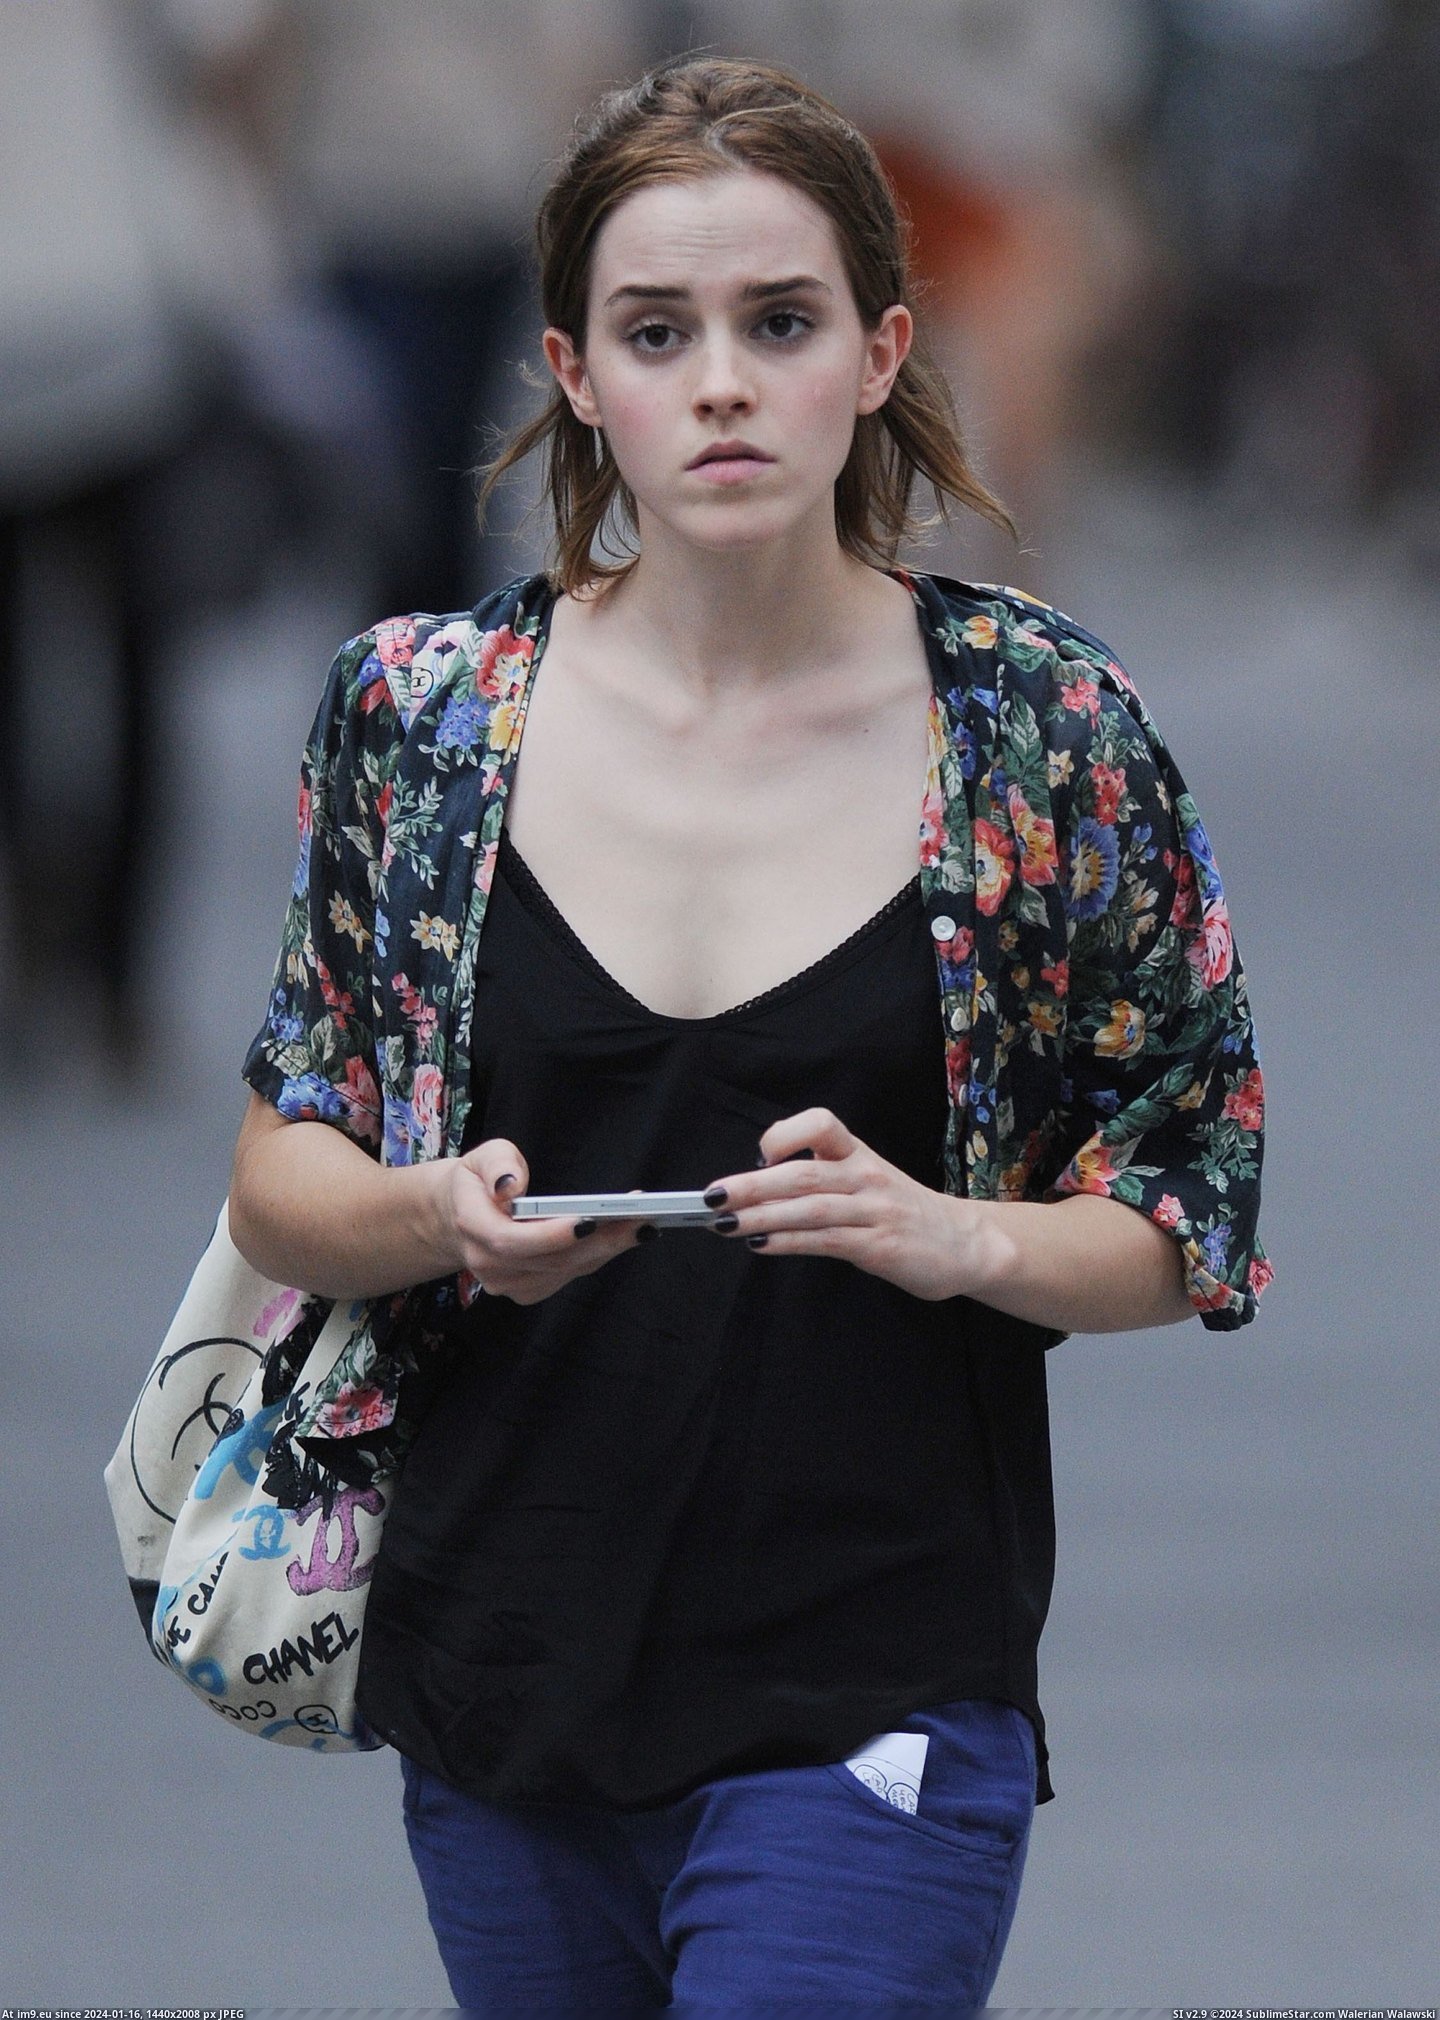 #Photo #New #Out #York #Xfktuva #Emma #Watson #City Emma Watson Out And About In New York City July 26 2012 Xfktuva (emma photo) Pic. (Изображение из альбом Emma Watson Photos))